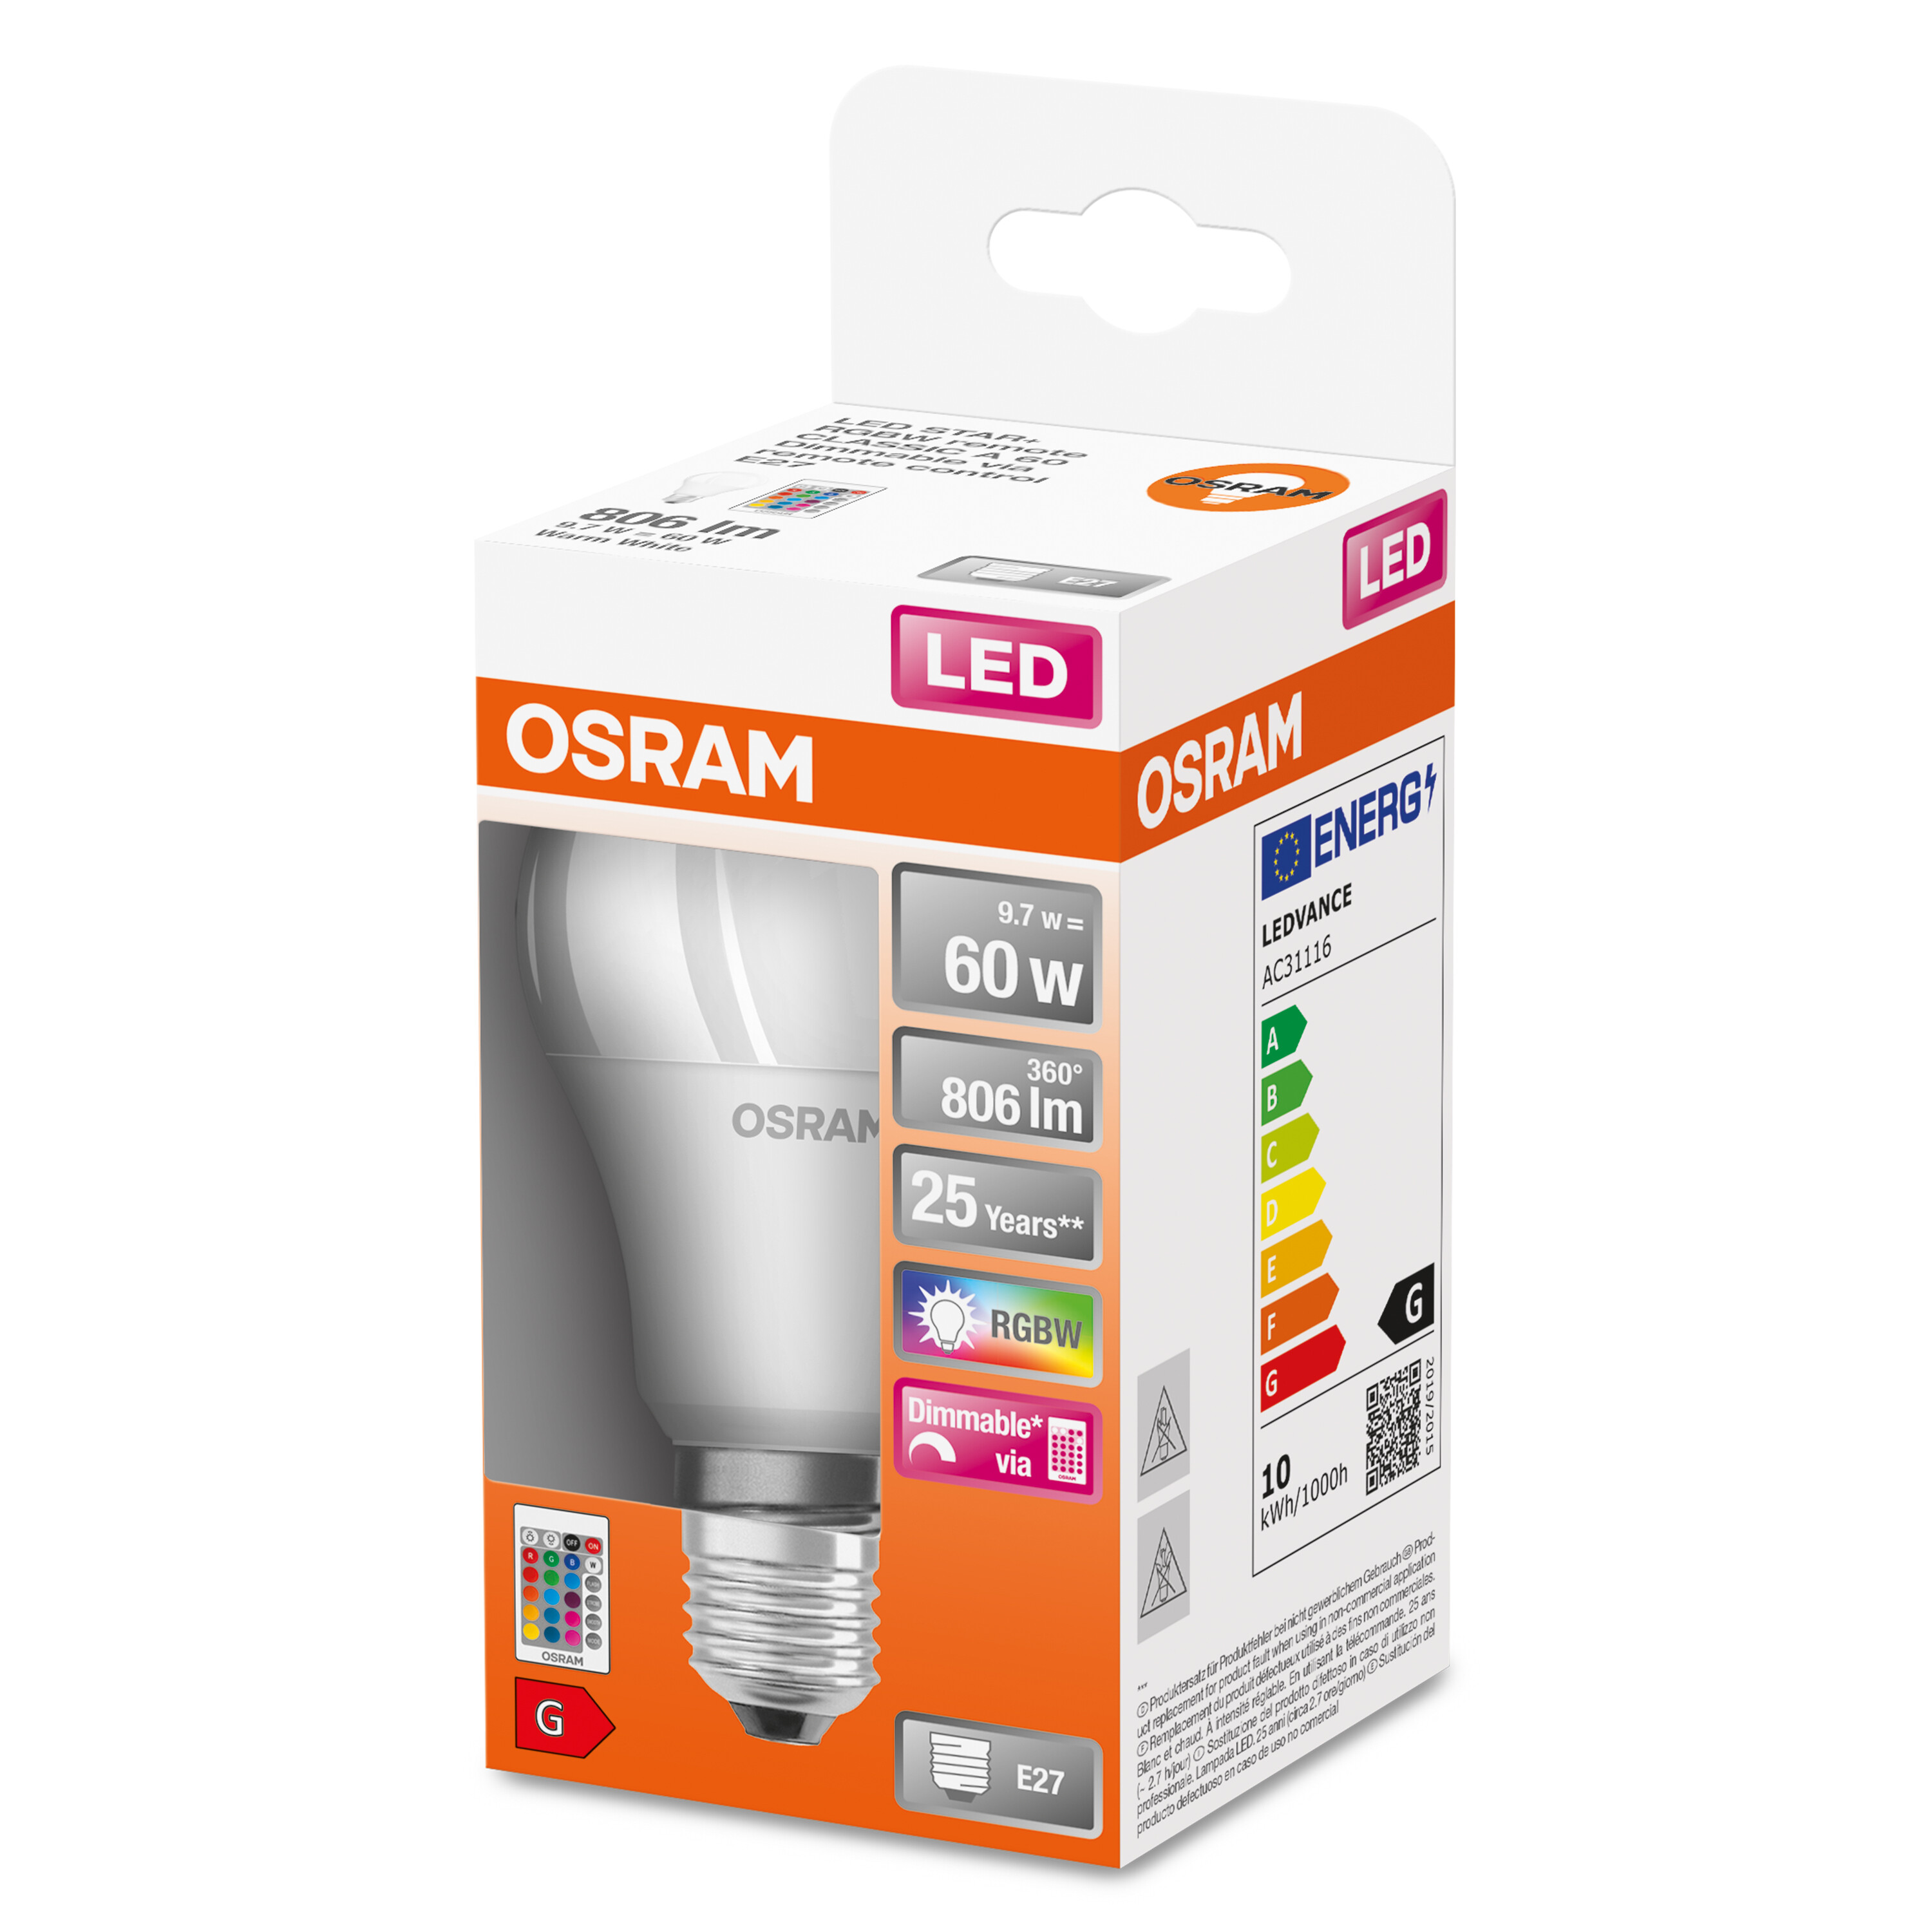 OSRAM  LED Retrofit Lampe remote LED RGBW control lamps with Warmweiß